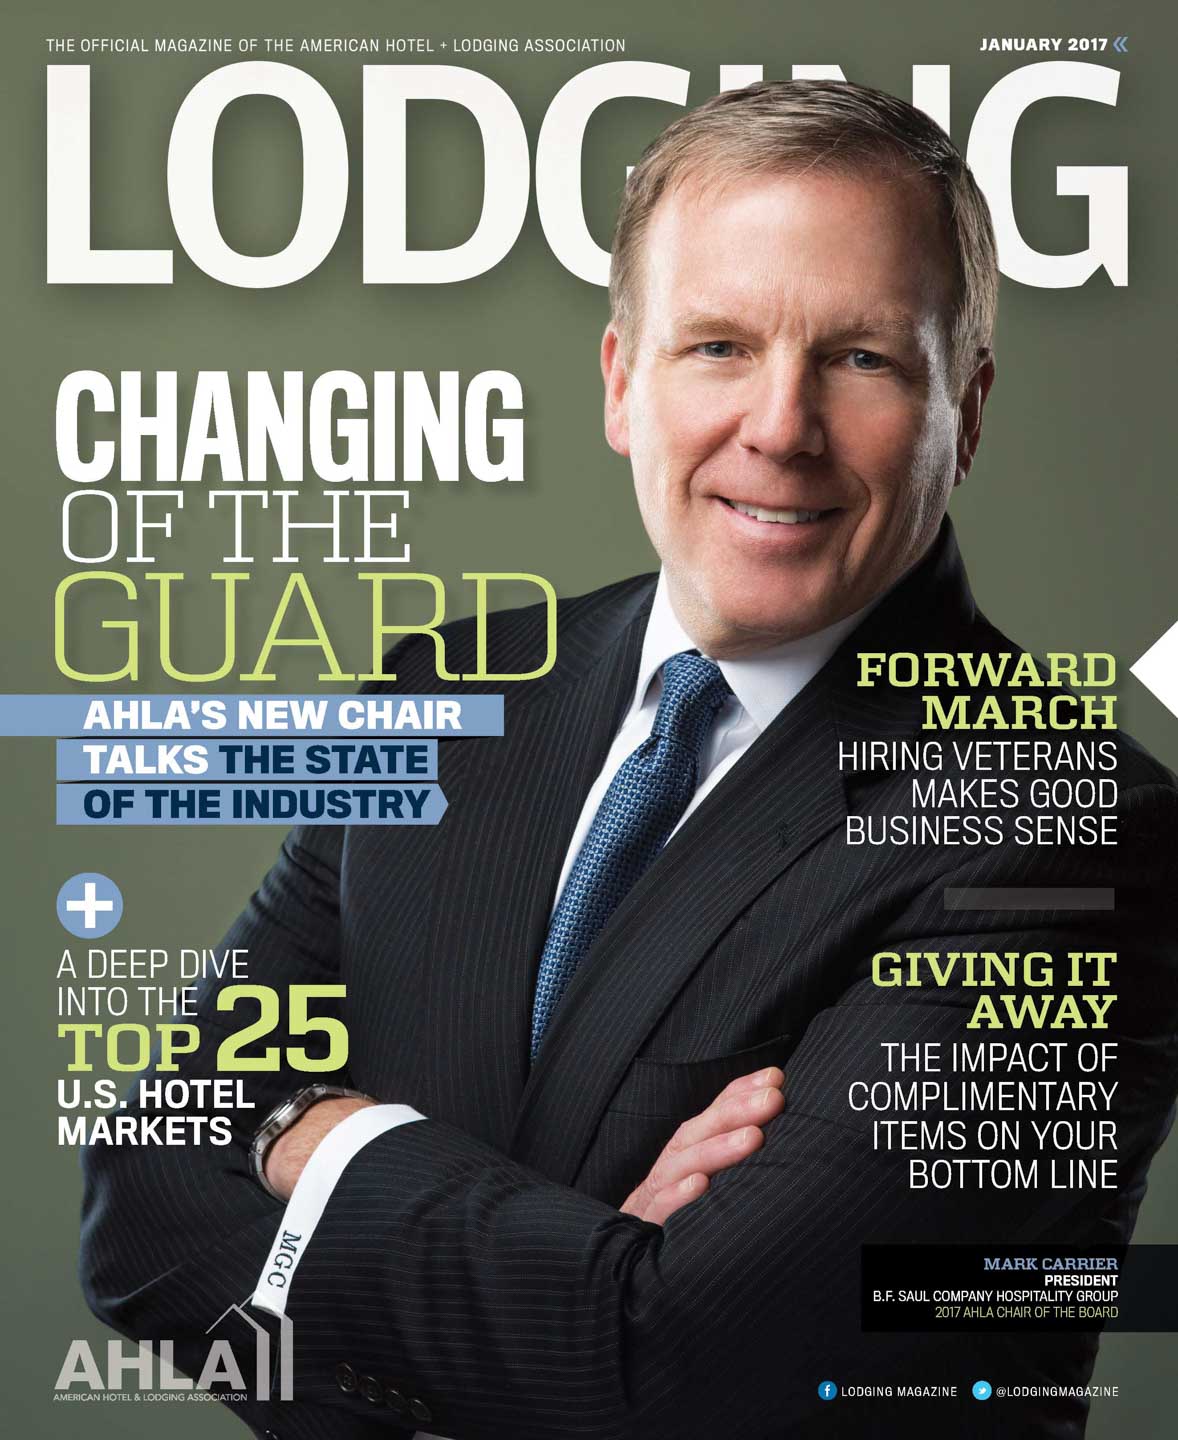 Lodging Magazine Cover Photo 